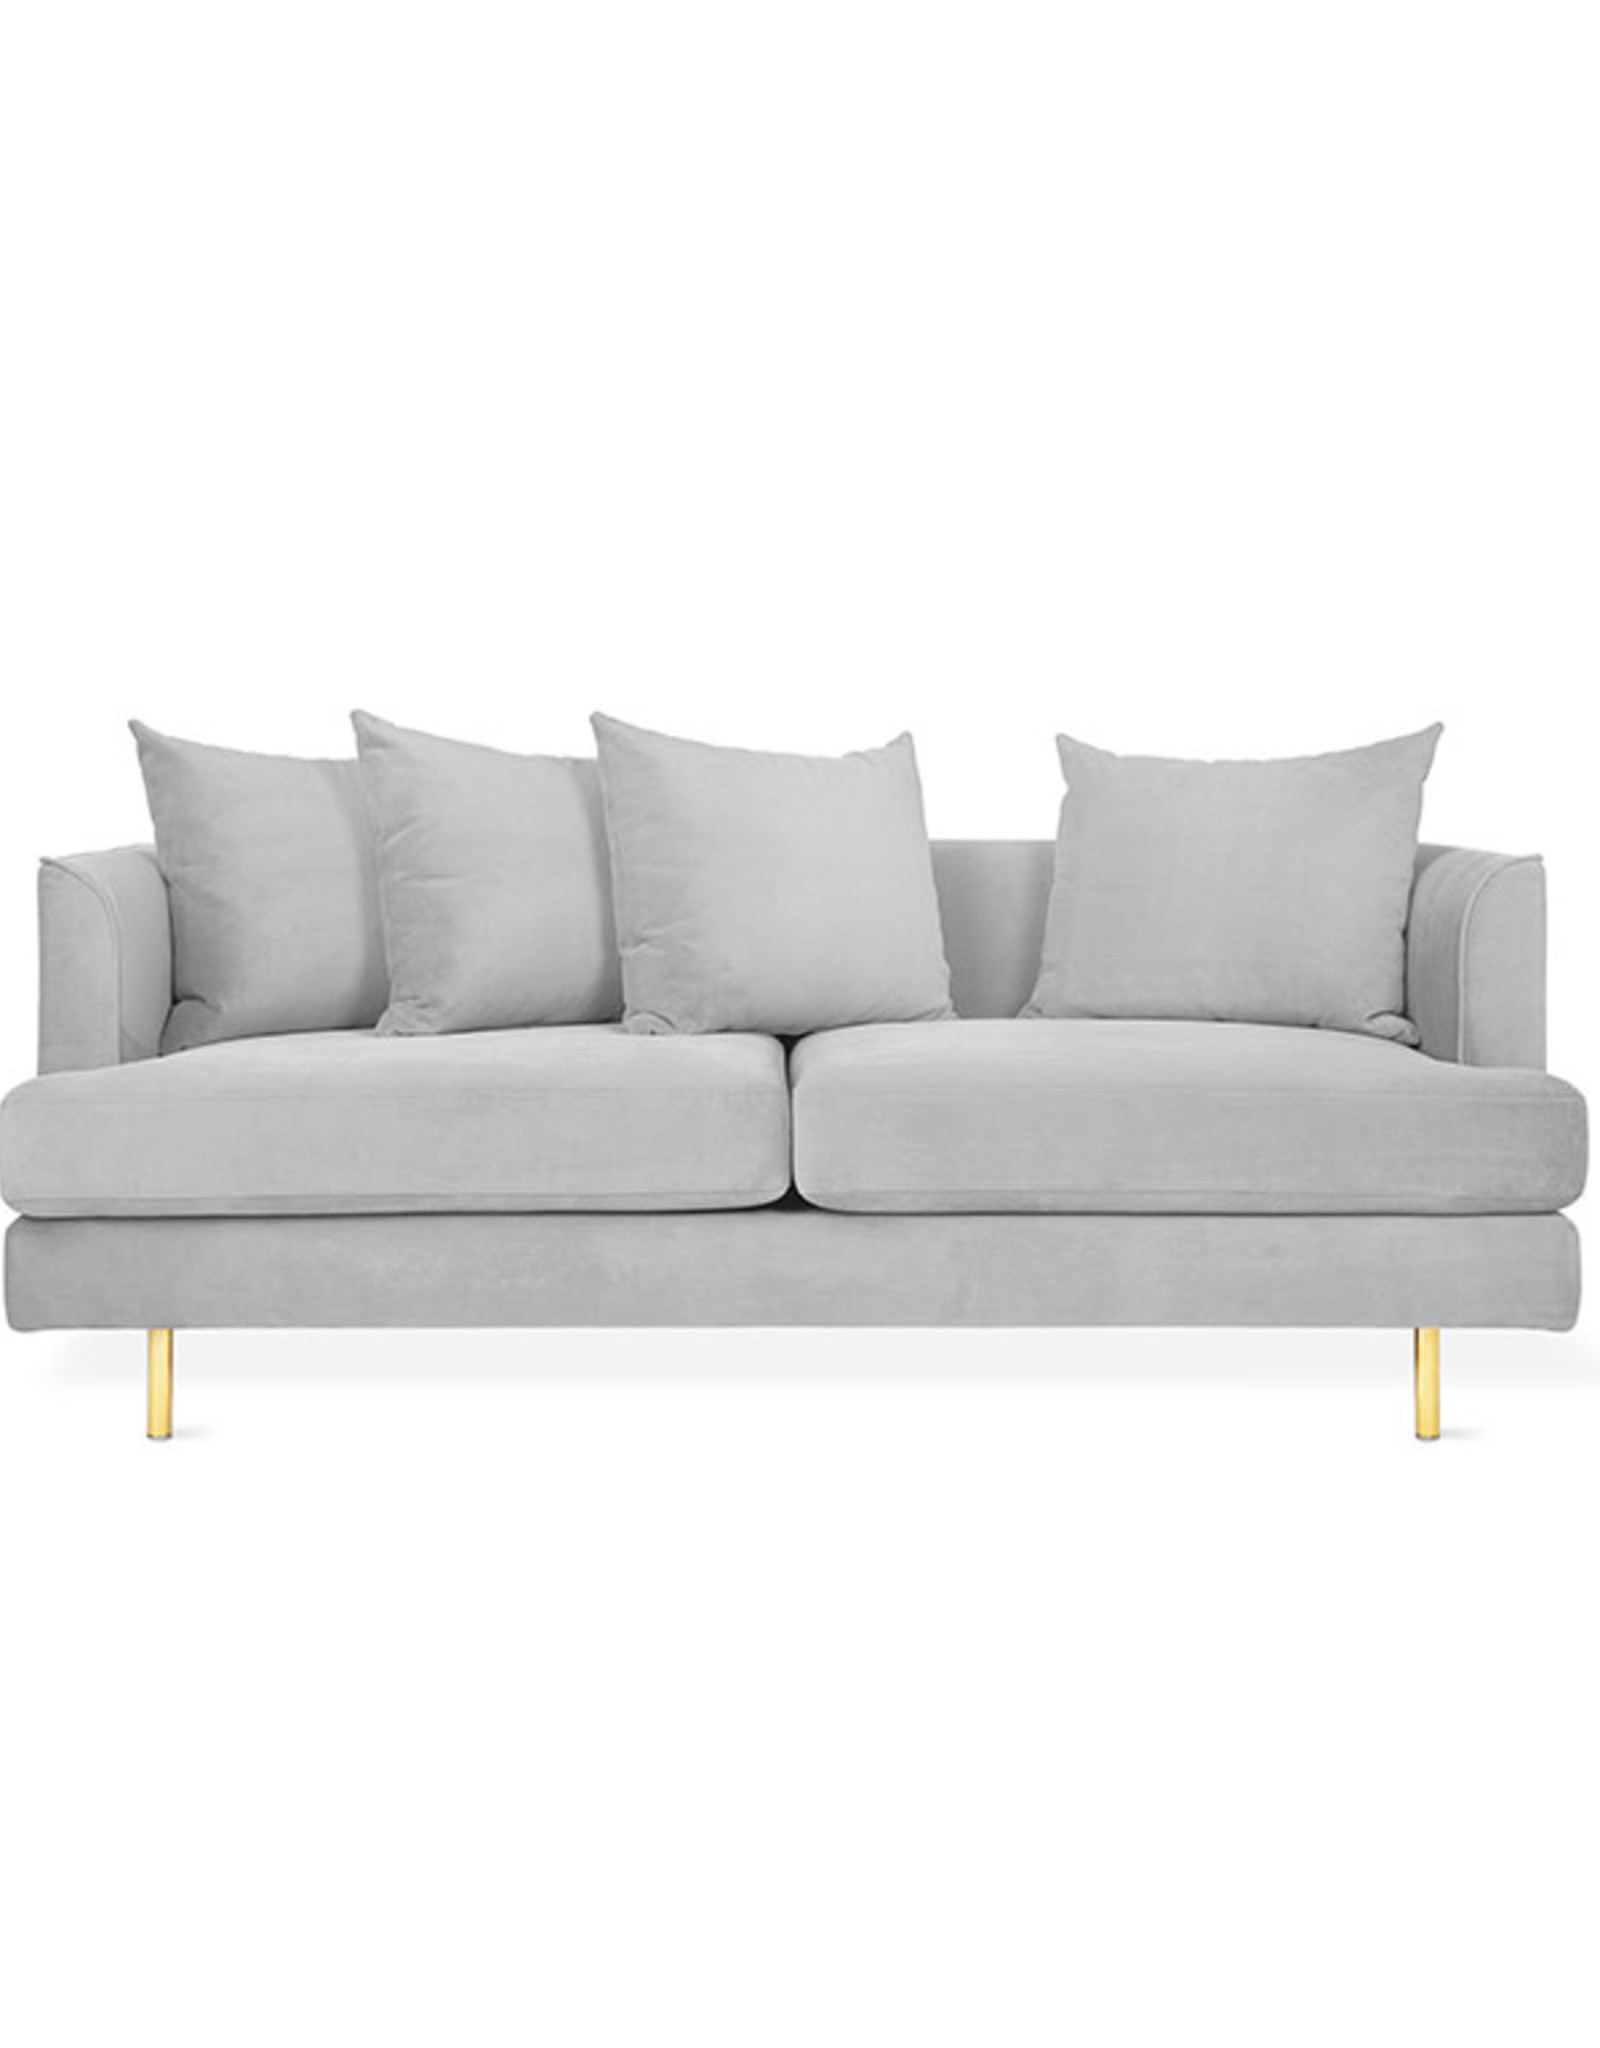 Gus* Modern Margot Loft Sofa